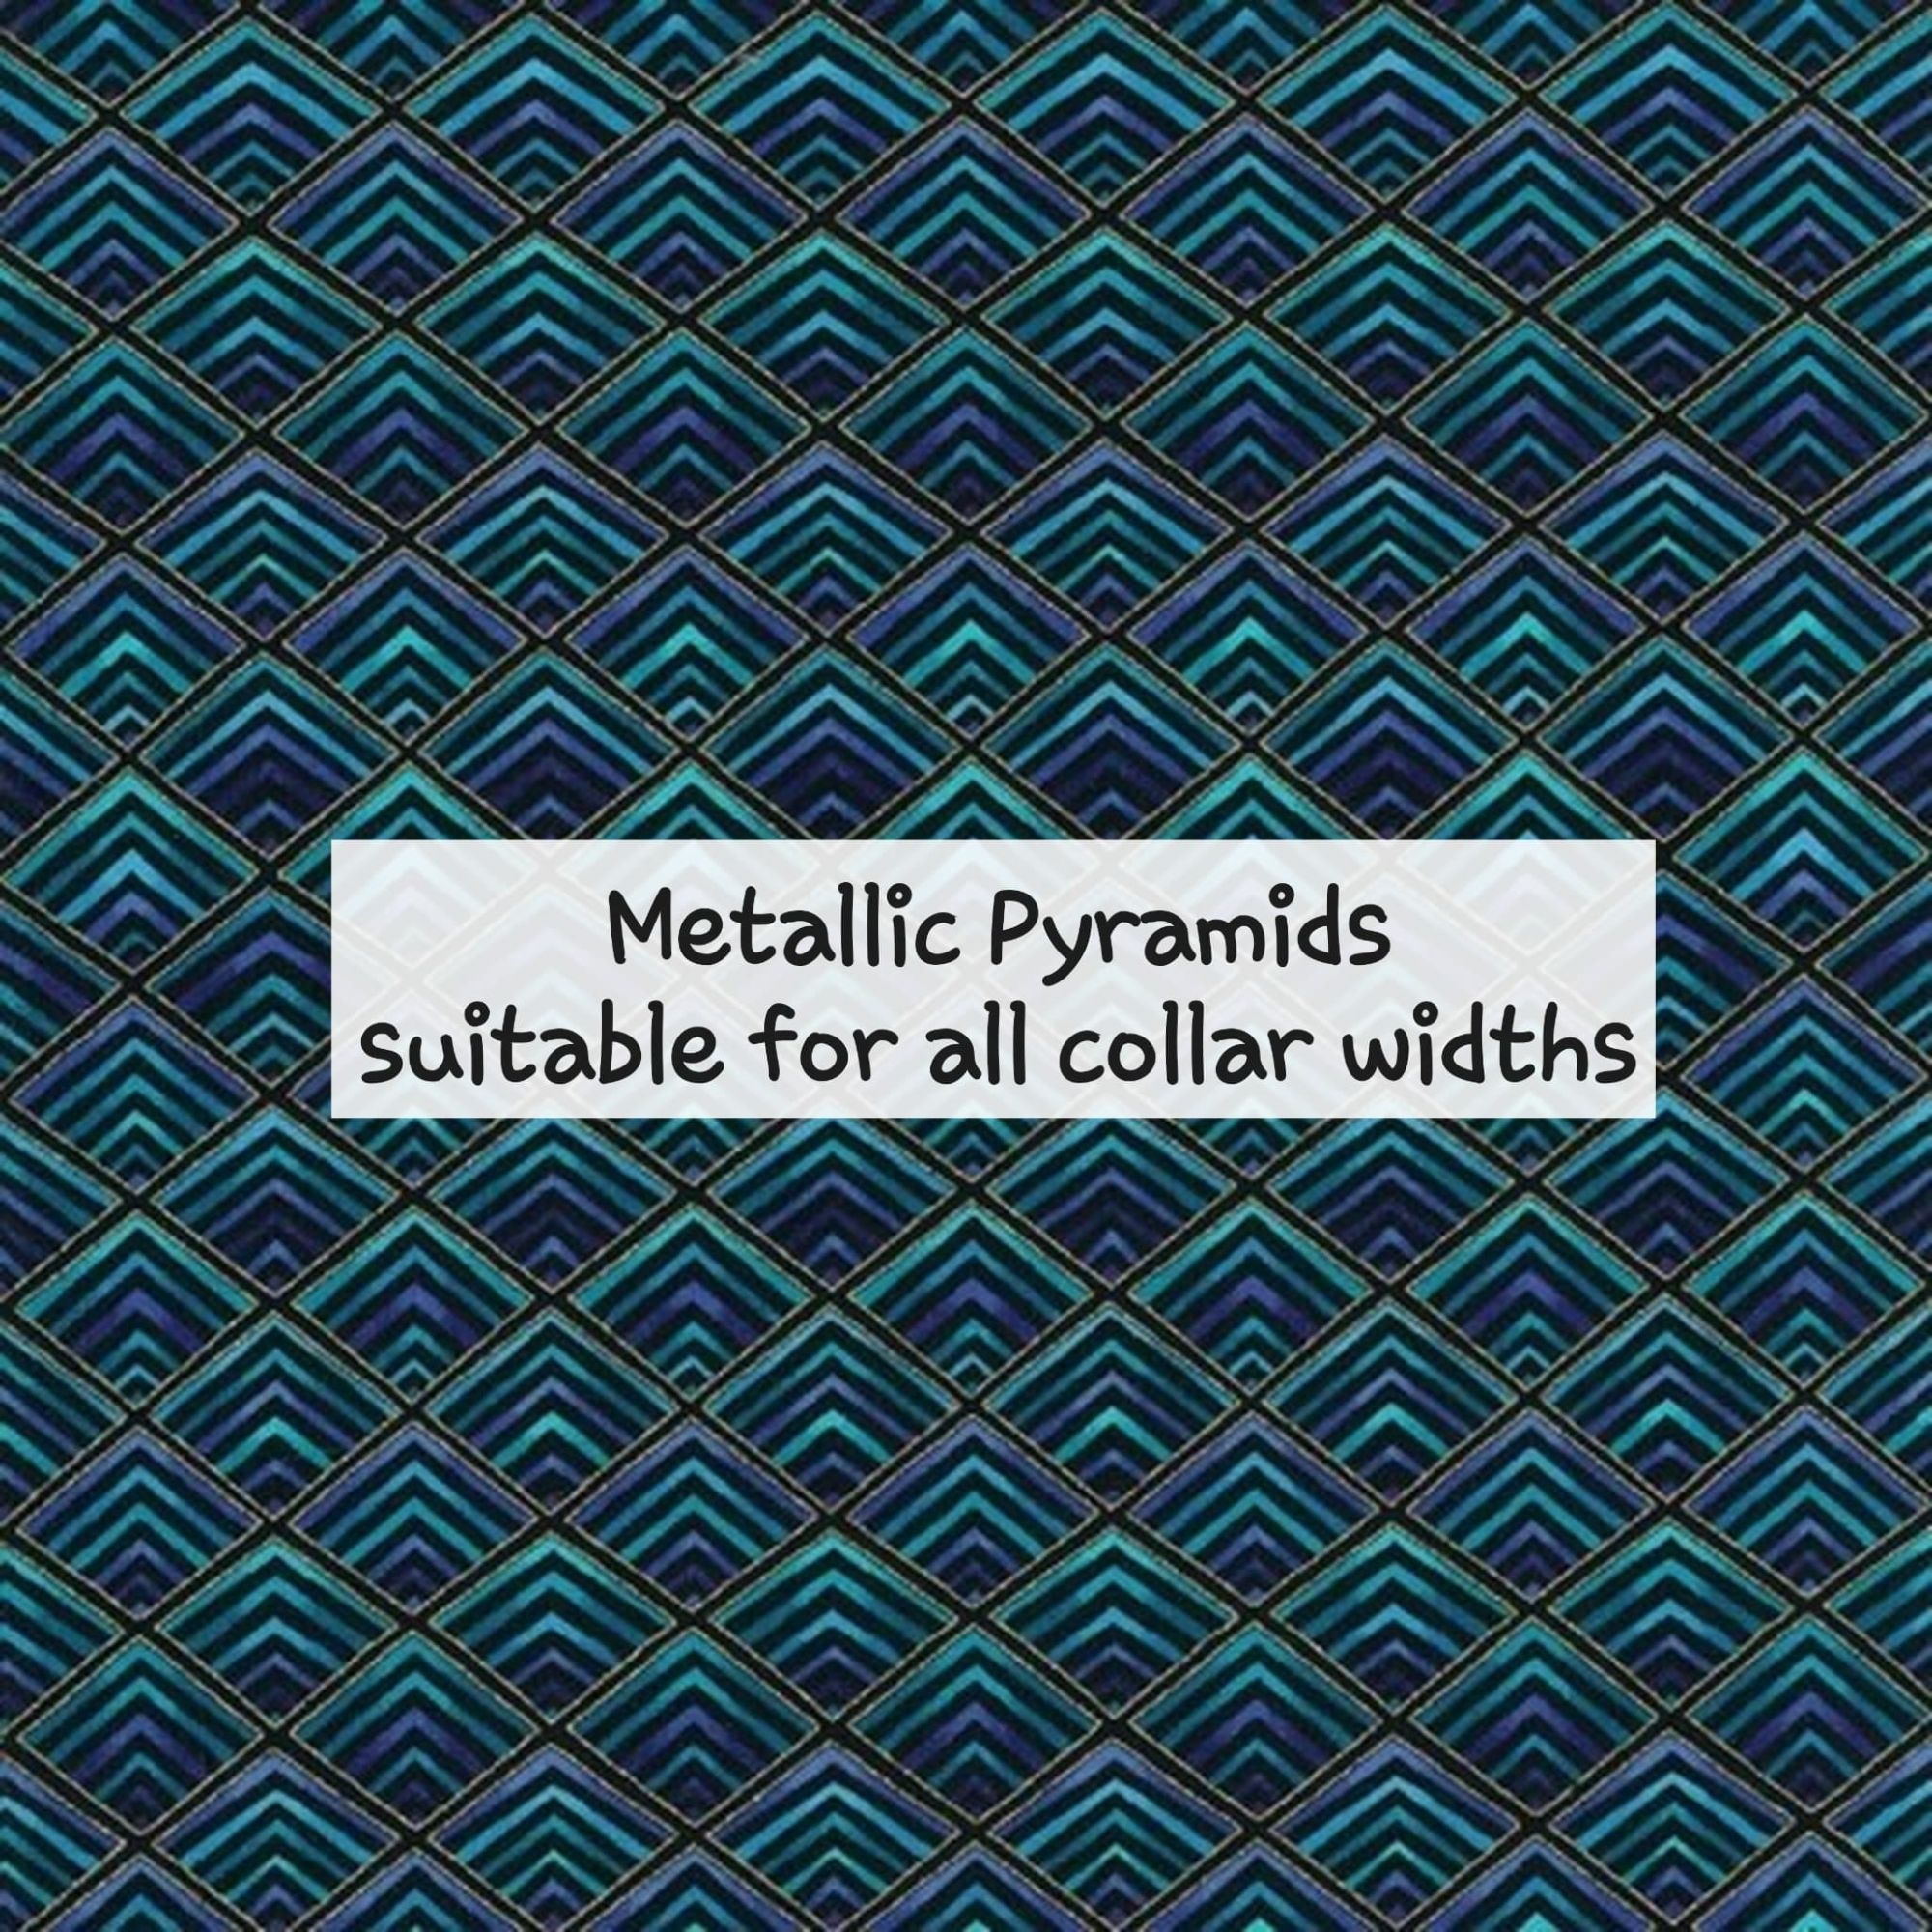 Metallic Pyramids